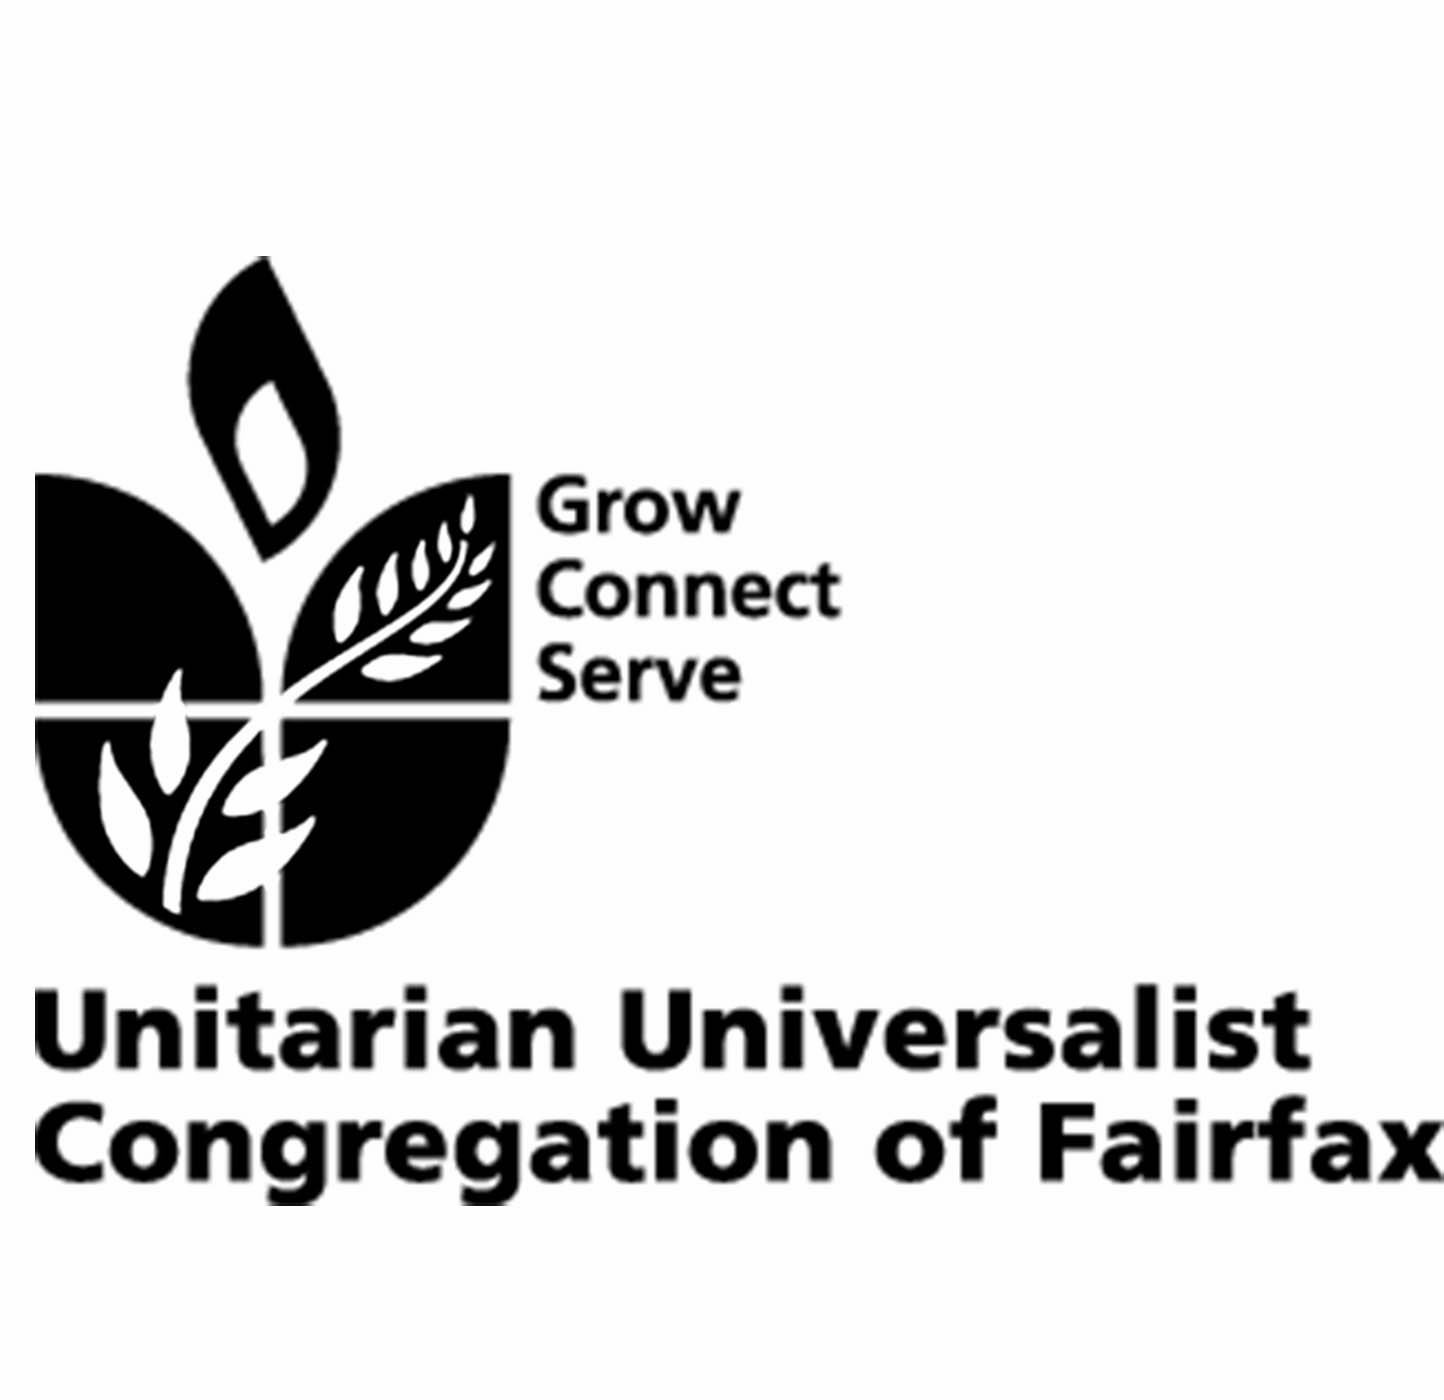 UUCF – Unitarian Universalist Congregation in Fairfax Virginia